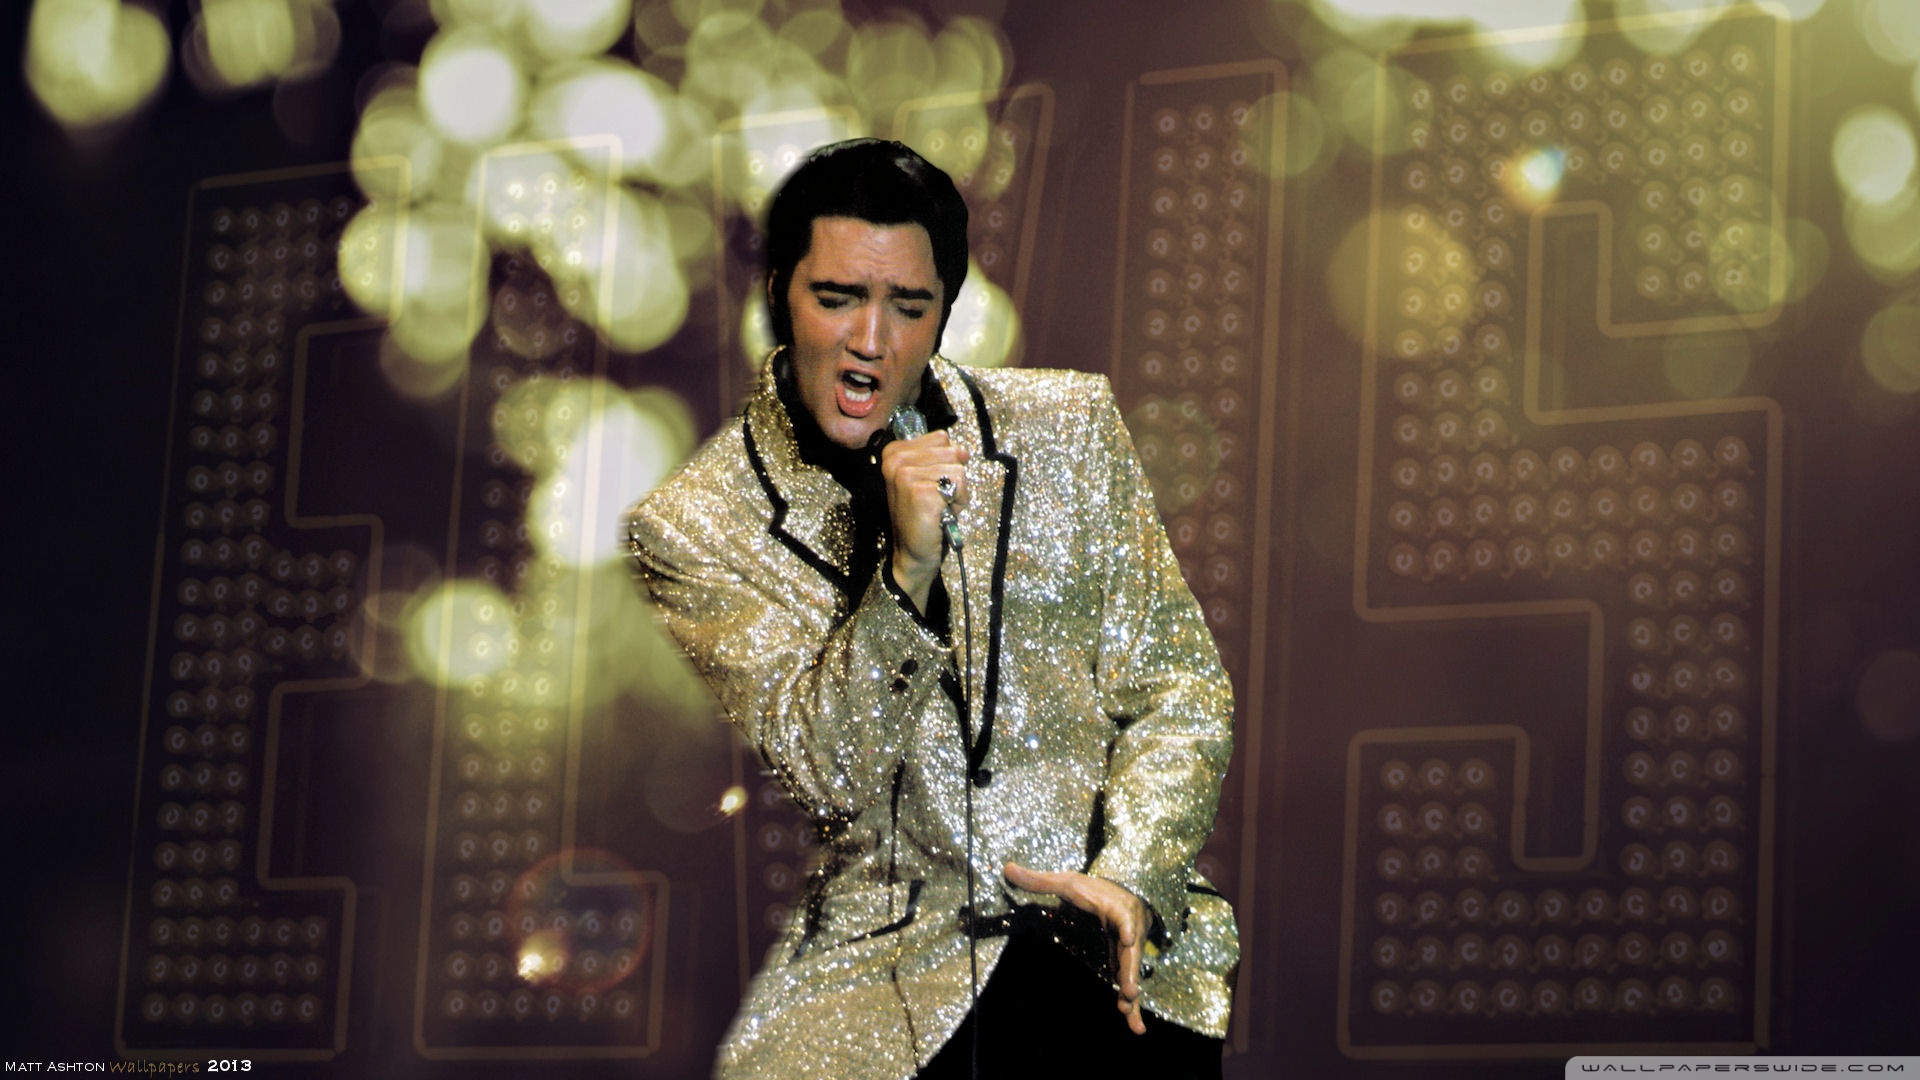 🟠 Download BETTER 21 Elvis-presley-backgrounds Elvis-Presley-Music-and-Entertainment-Background-Wallpapers-.jpg elvis_presley_68_special-wallpaper-1920x1080